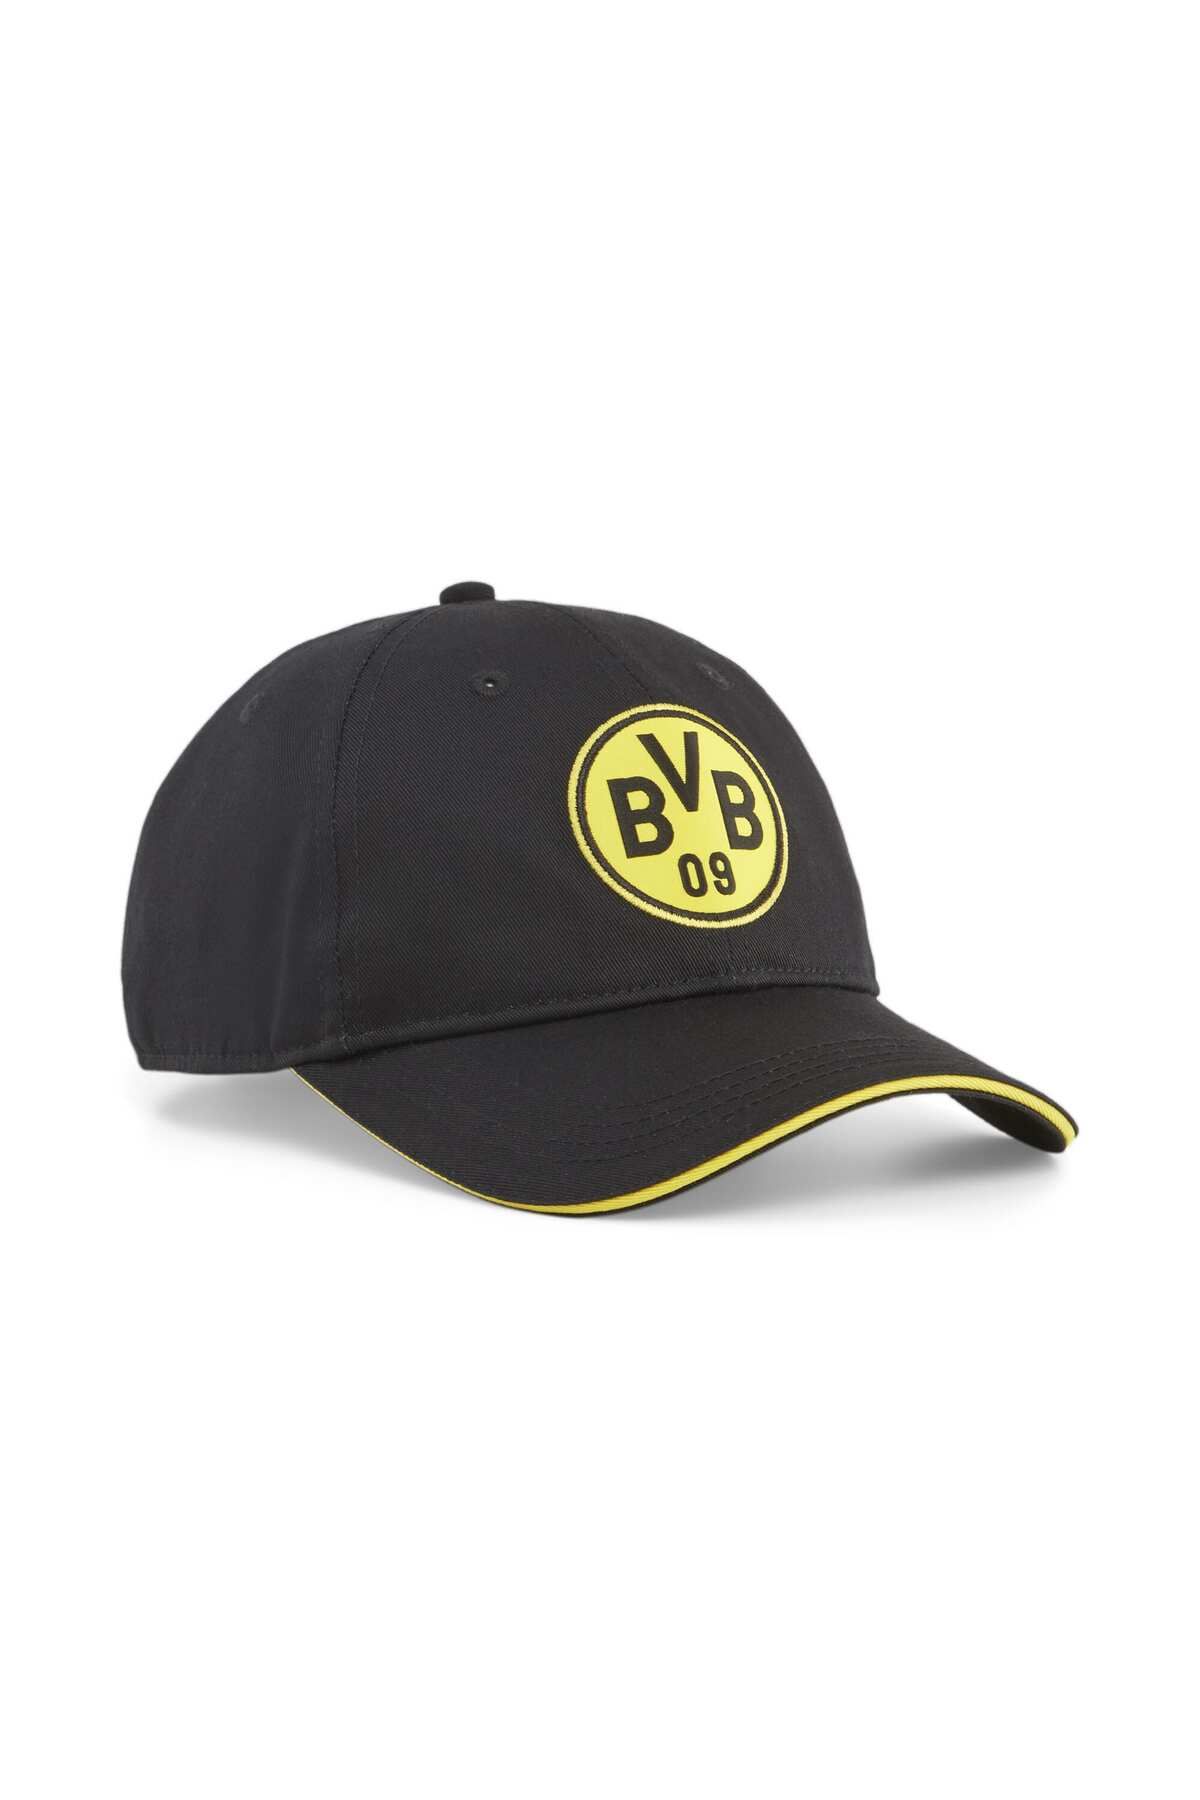 Puma کلاه تیمی Borussıa Dortmund